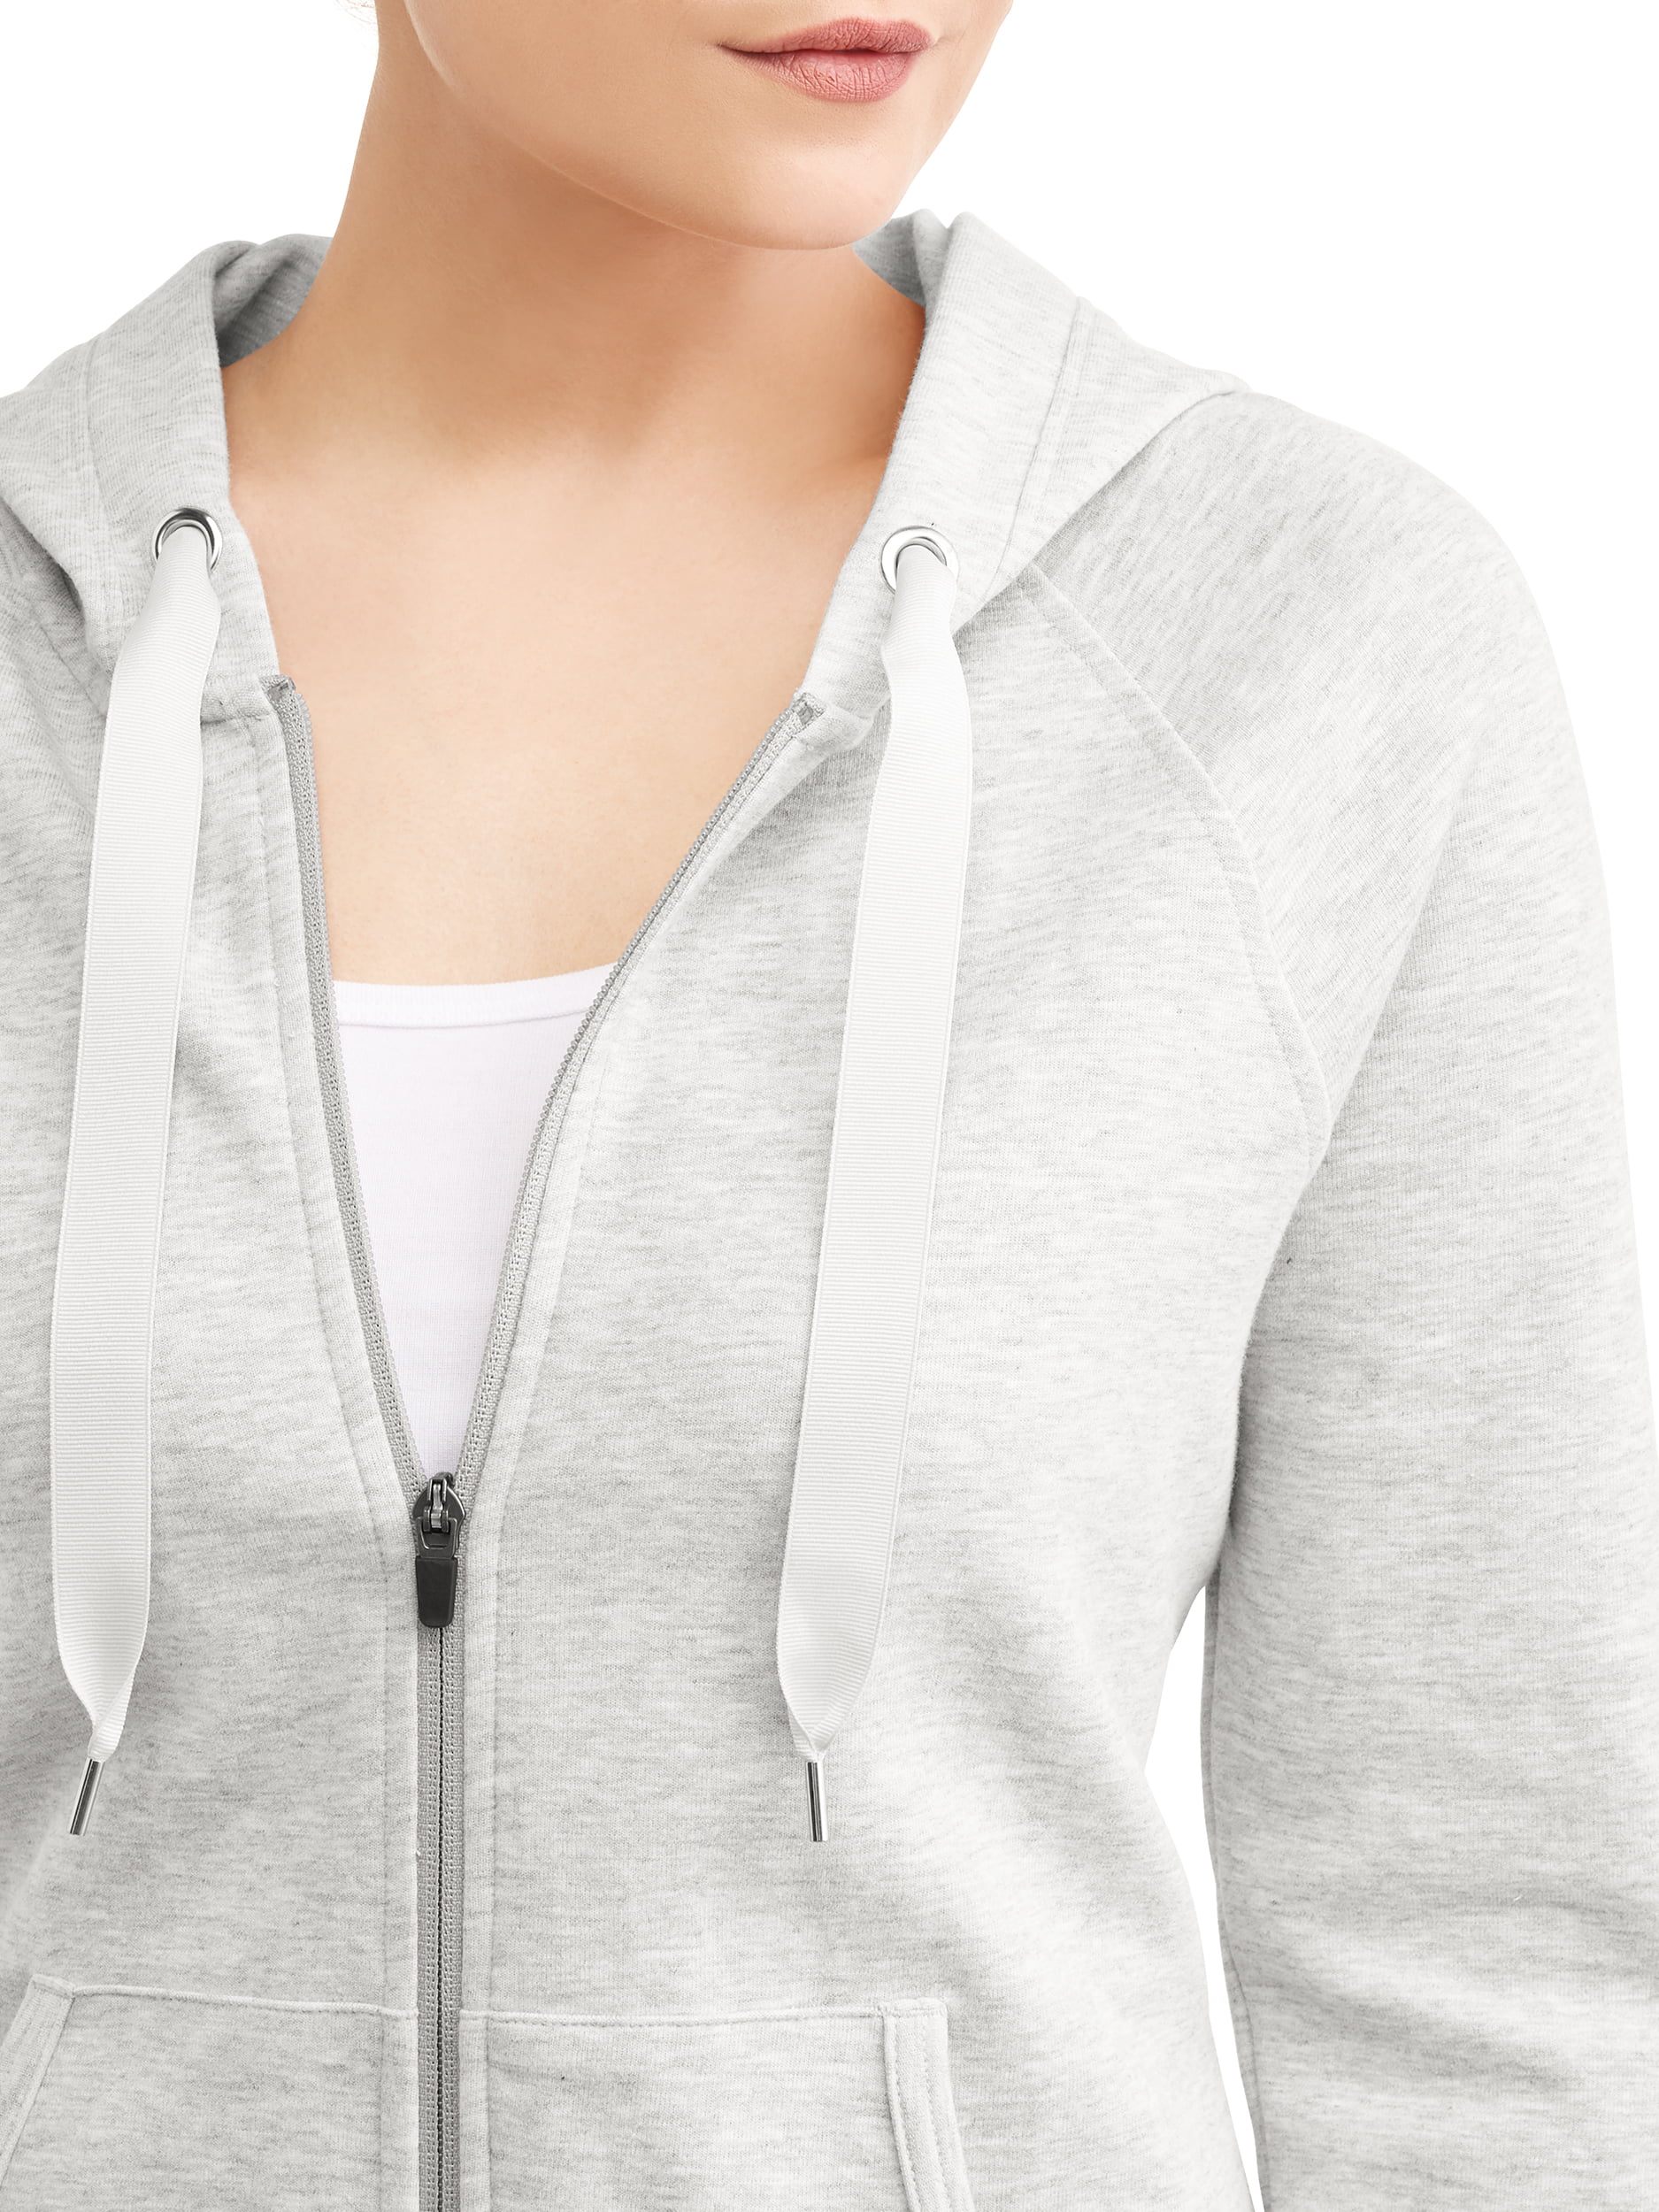 Women's Athleisure Double Knit Tunic Zip Up Sweatshirt - Walmart.com